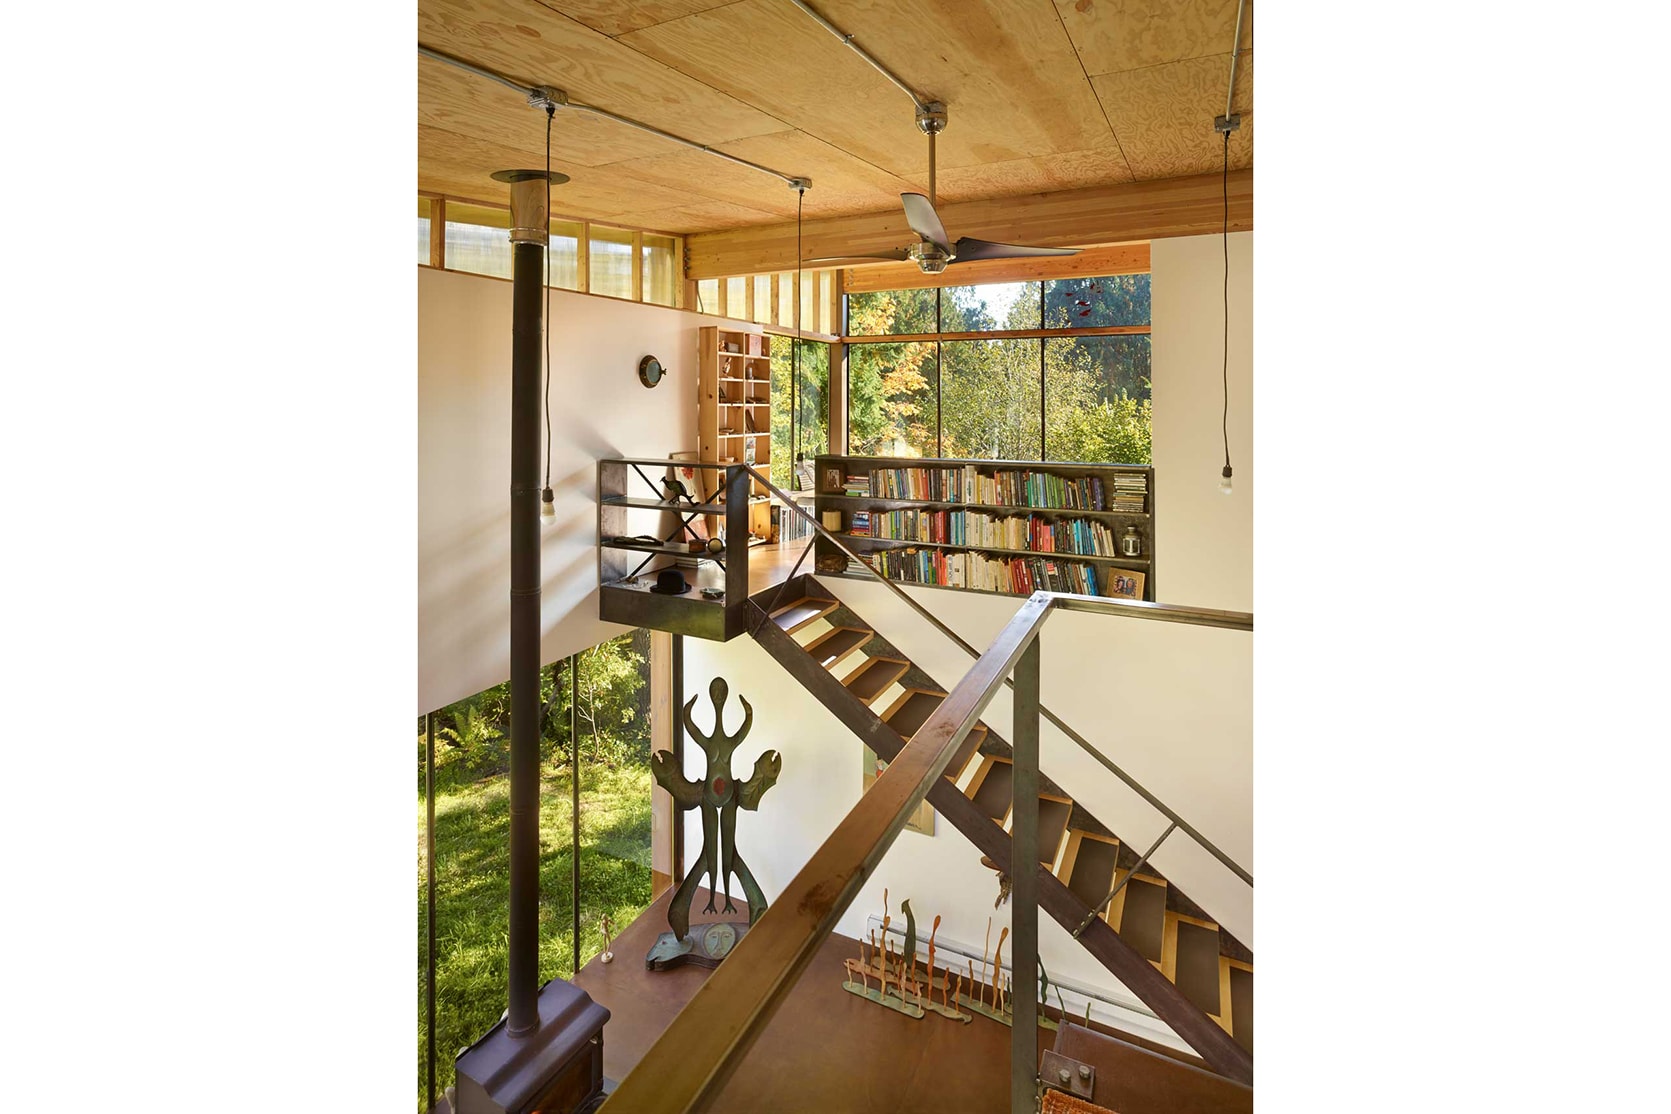 Artist's Studio Woods Forest Eerkes Architects Washington State Kitchen Living Area Sleeping Loft Steel Staircase Houses Homes